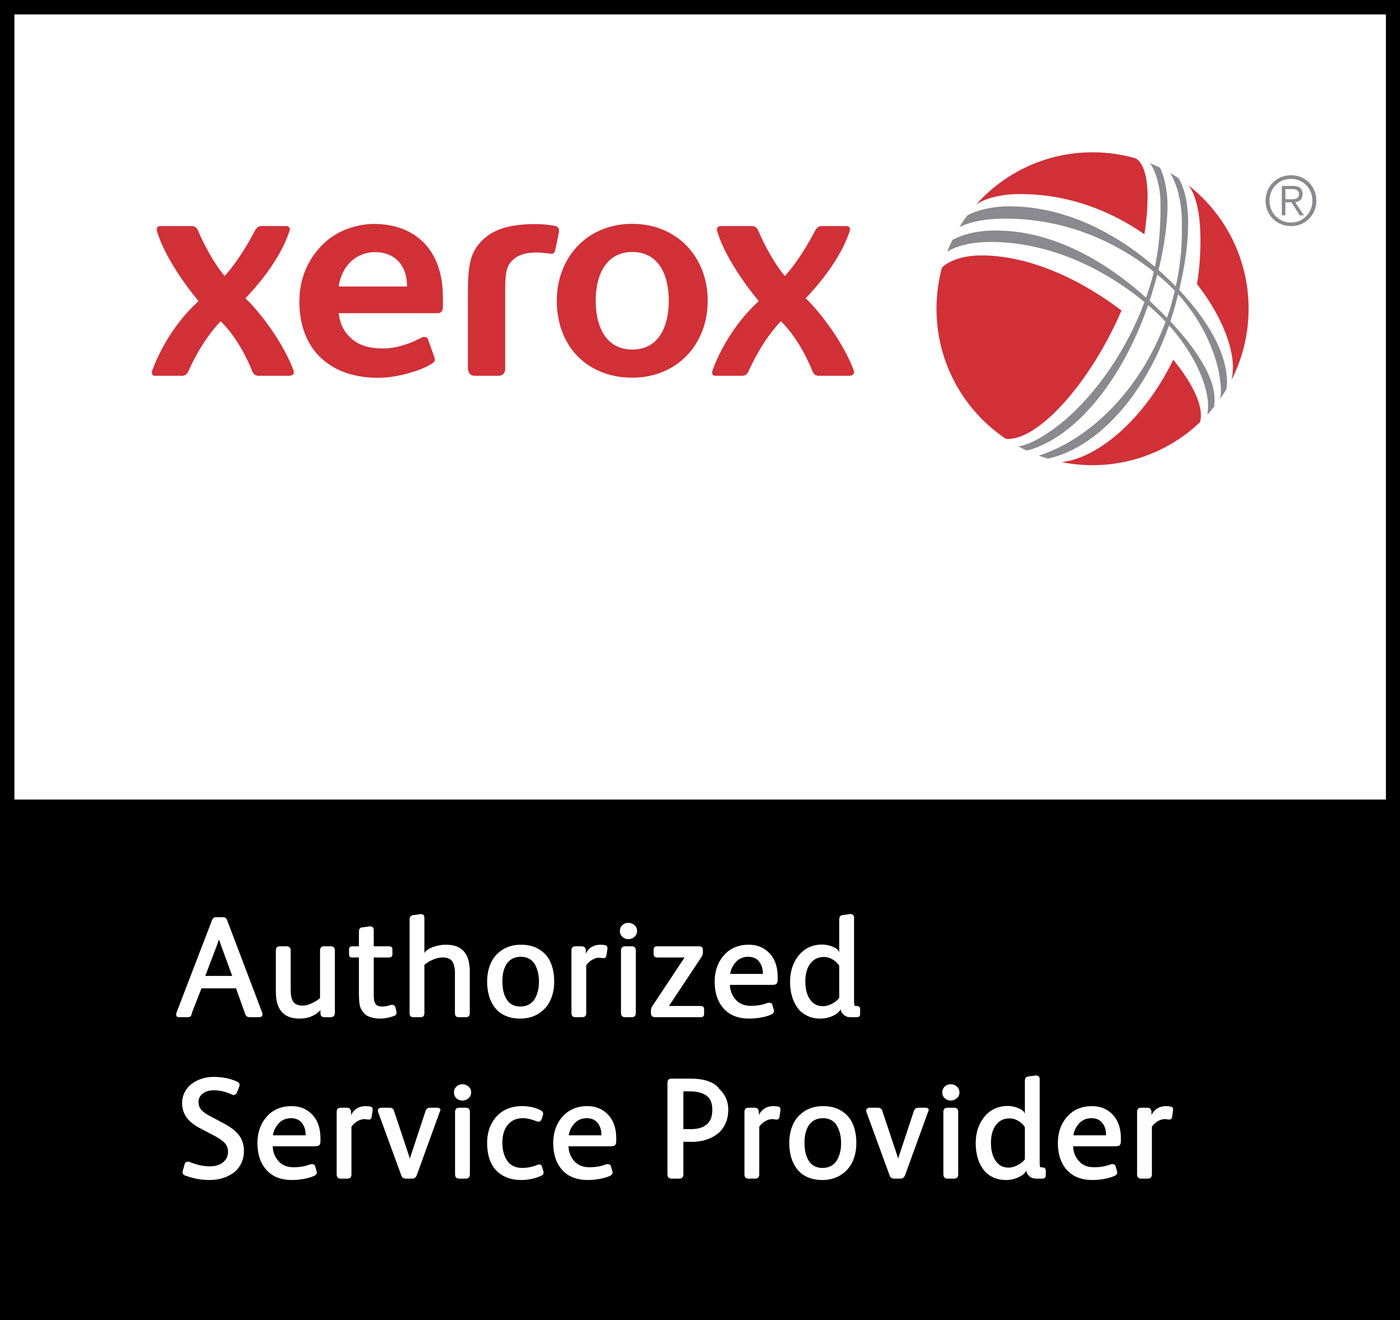 XEROX ASP Partner Badge 2019